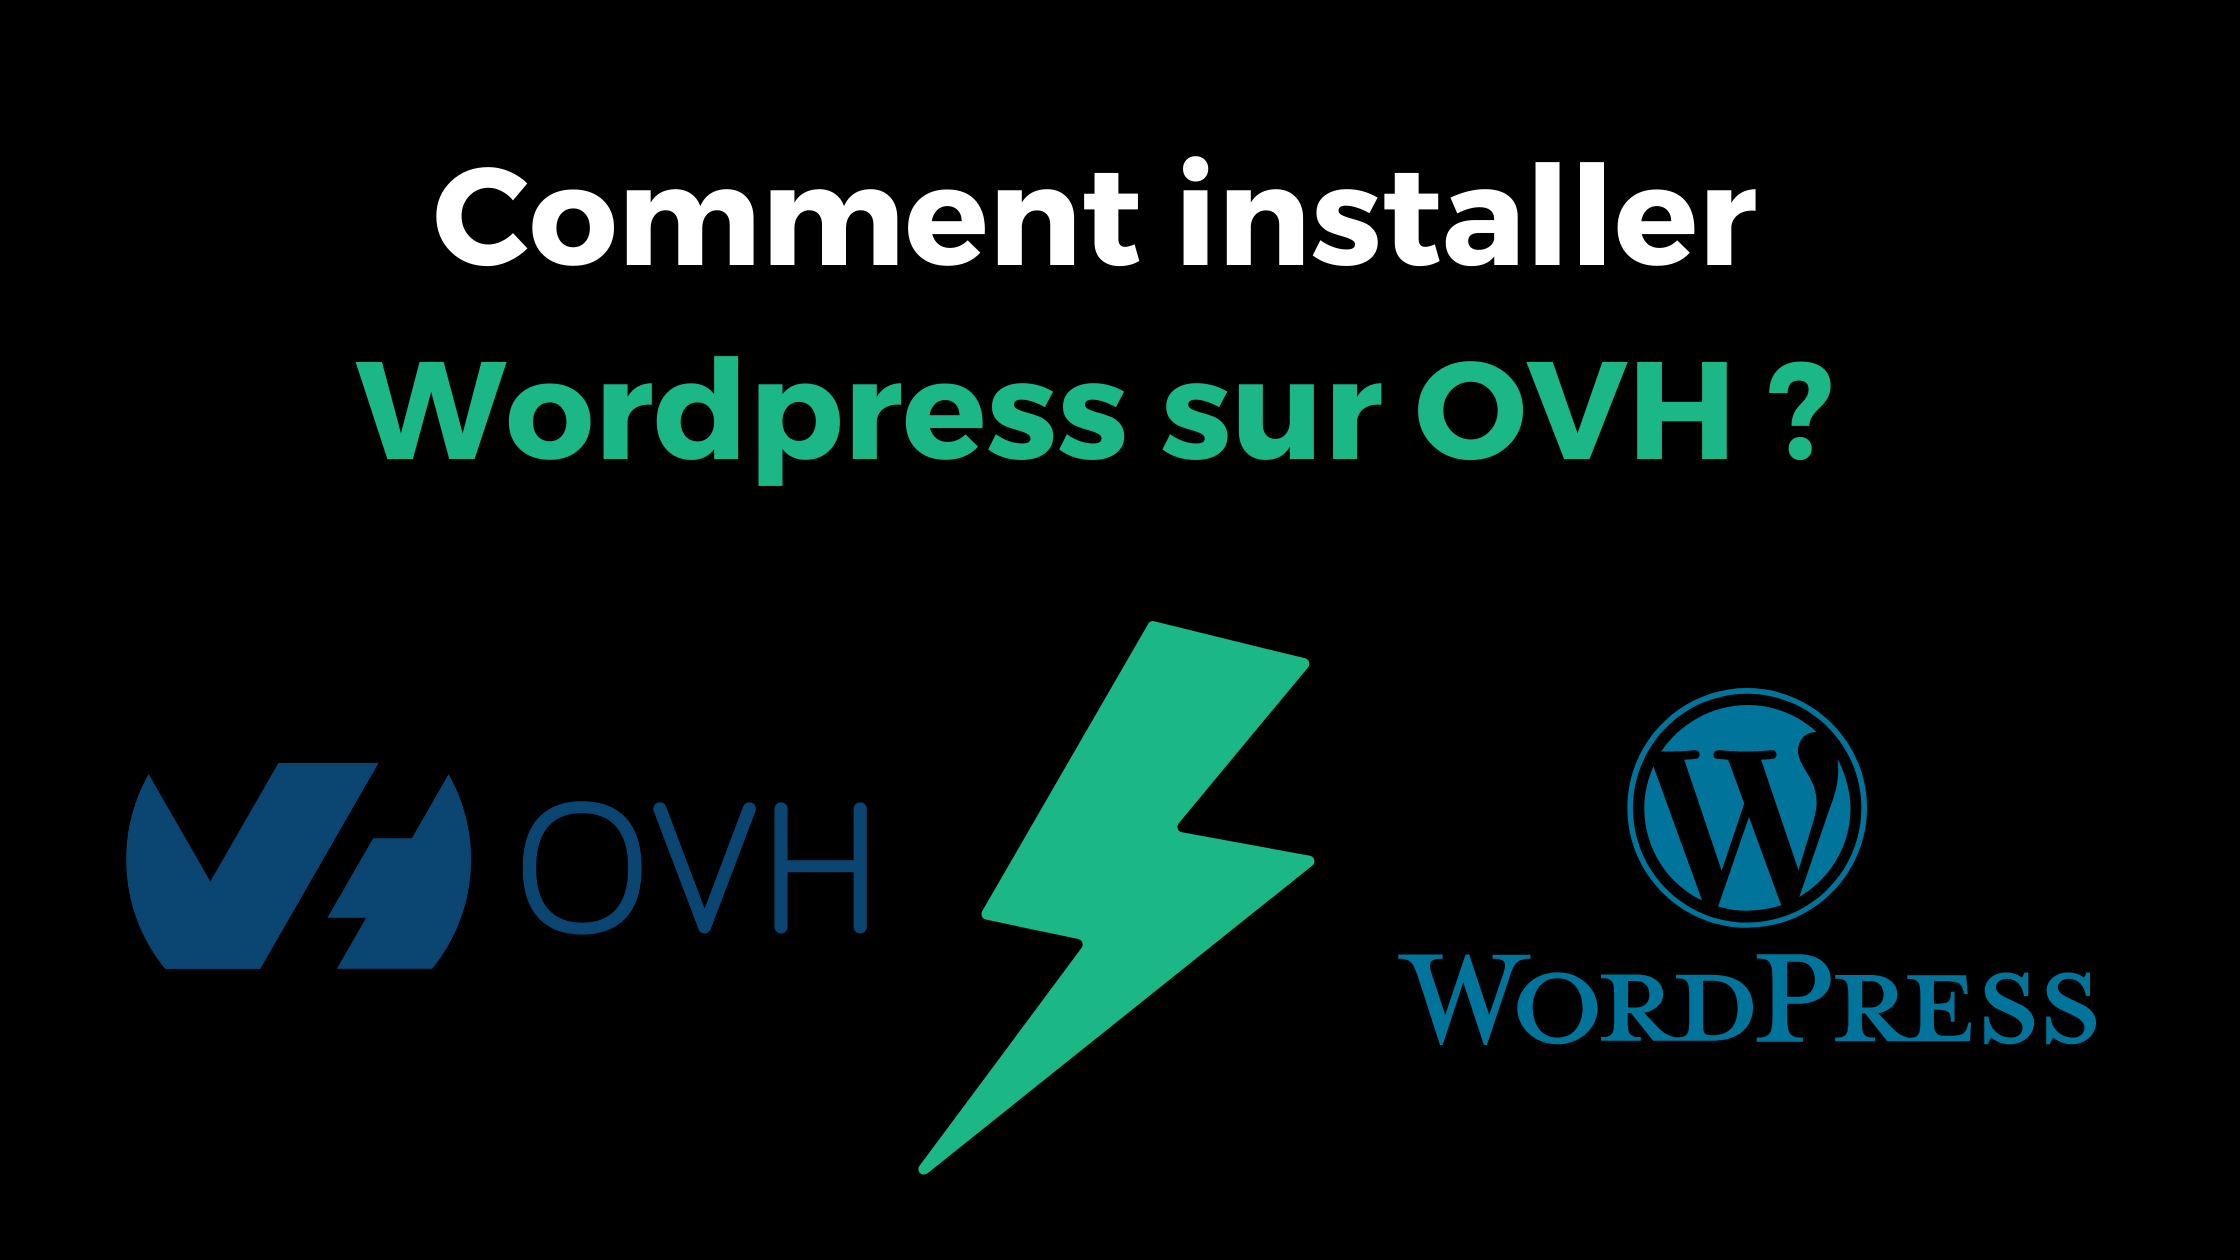 Comment installer wordpress sur ovh